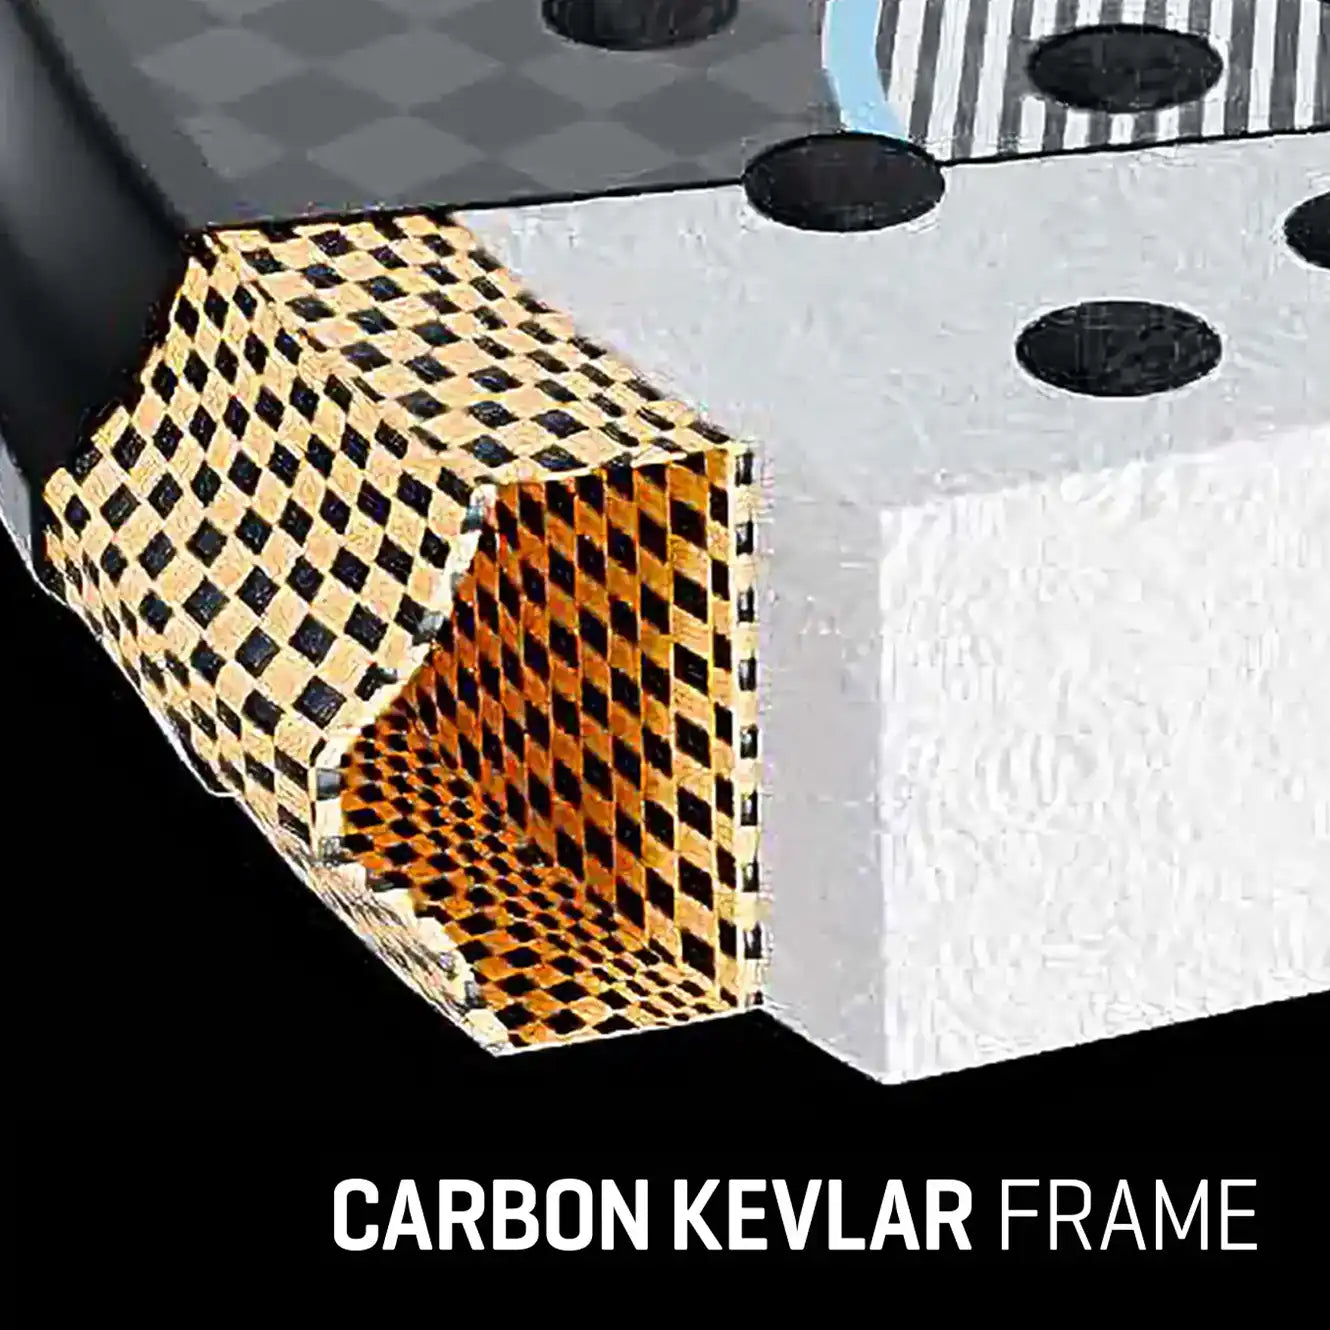 pallap racket technologies - Carbon Kevlar Frame